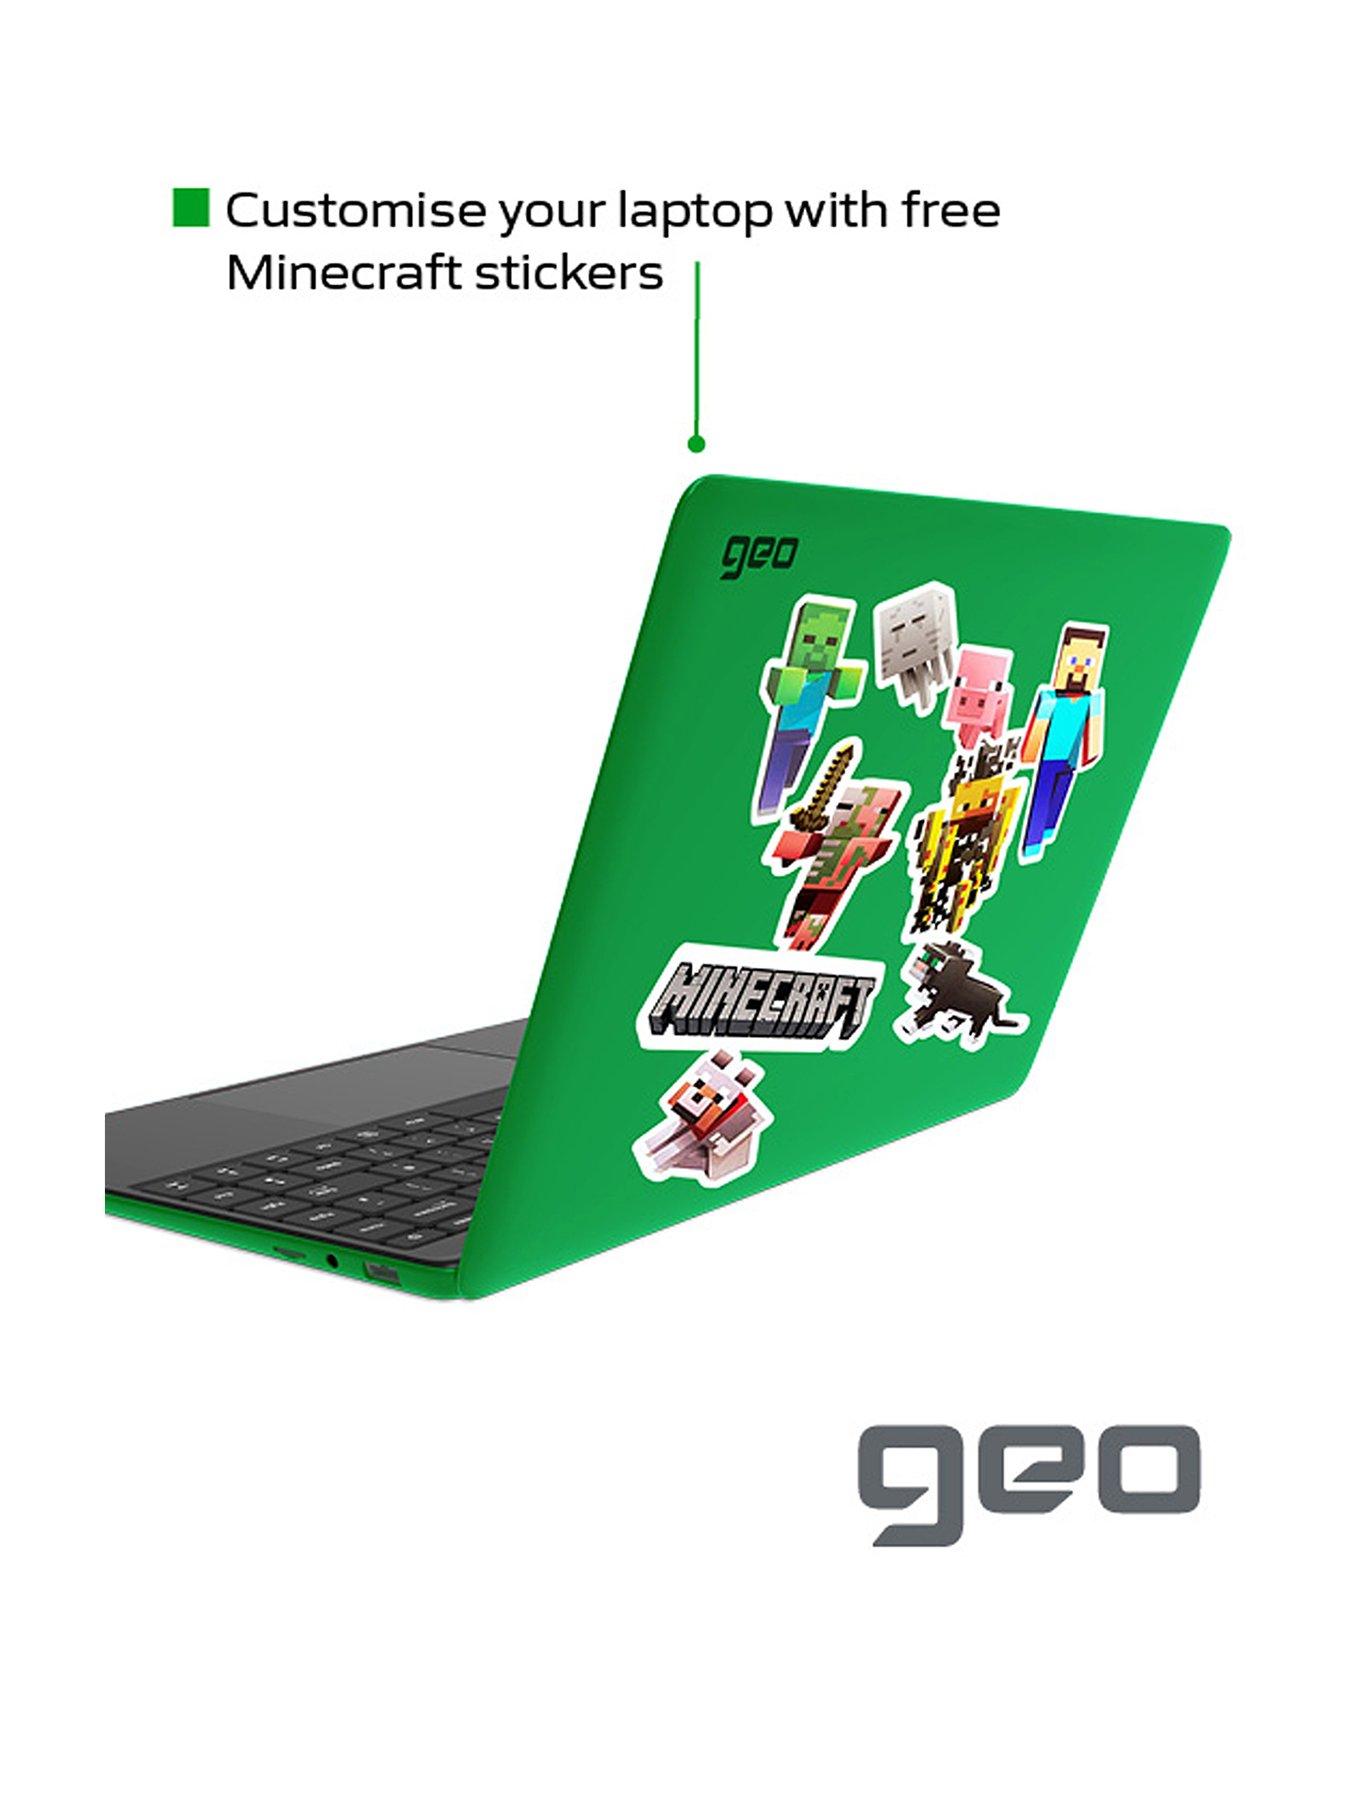 GeoBook 140 Minecraft Laptop - 14 inch HD, Intel Celeron, 4GB RAM, 64GB  Storage, Microsoft 365 Personal included - Green